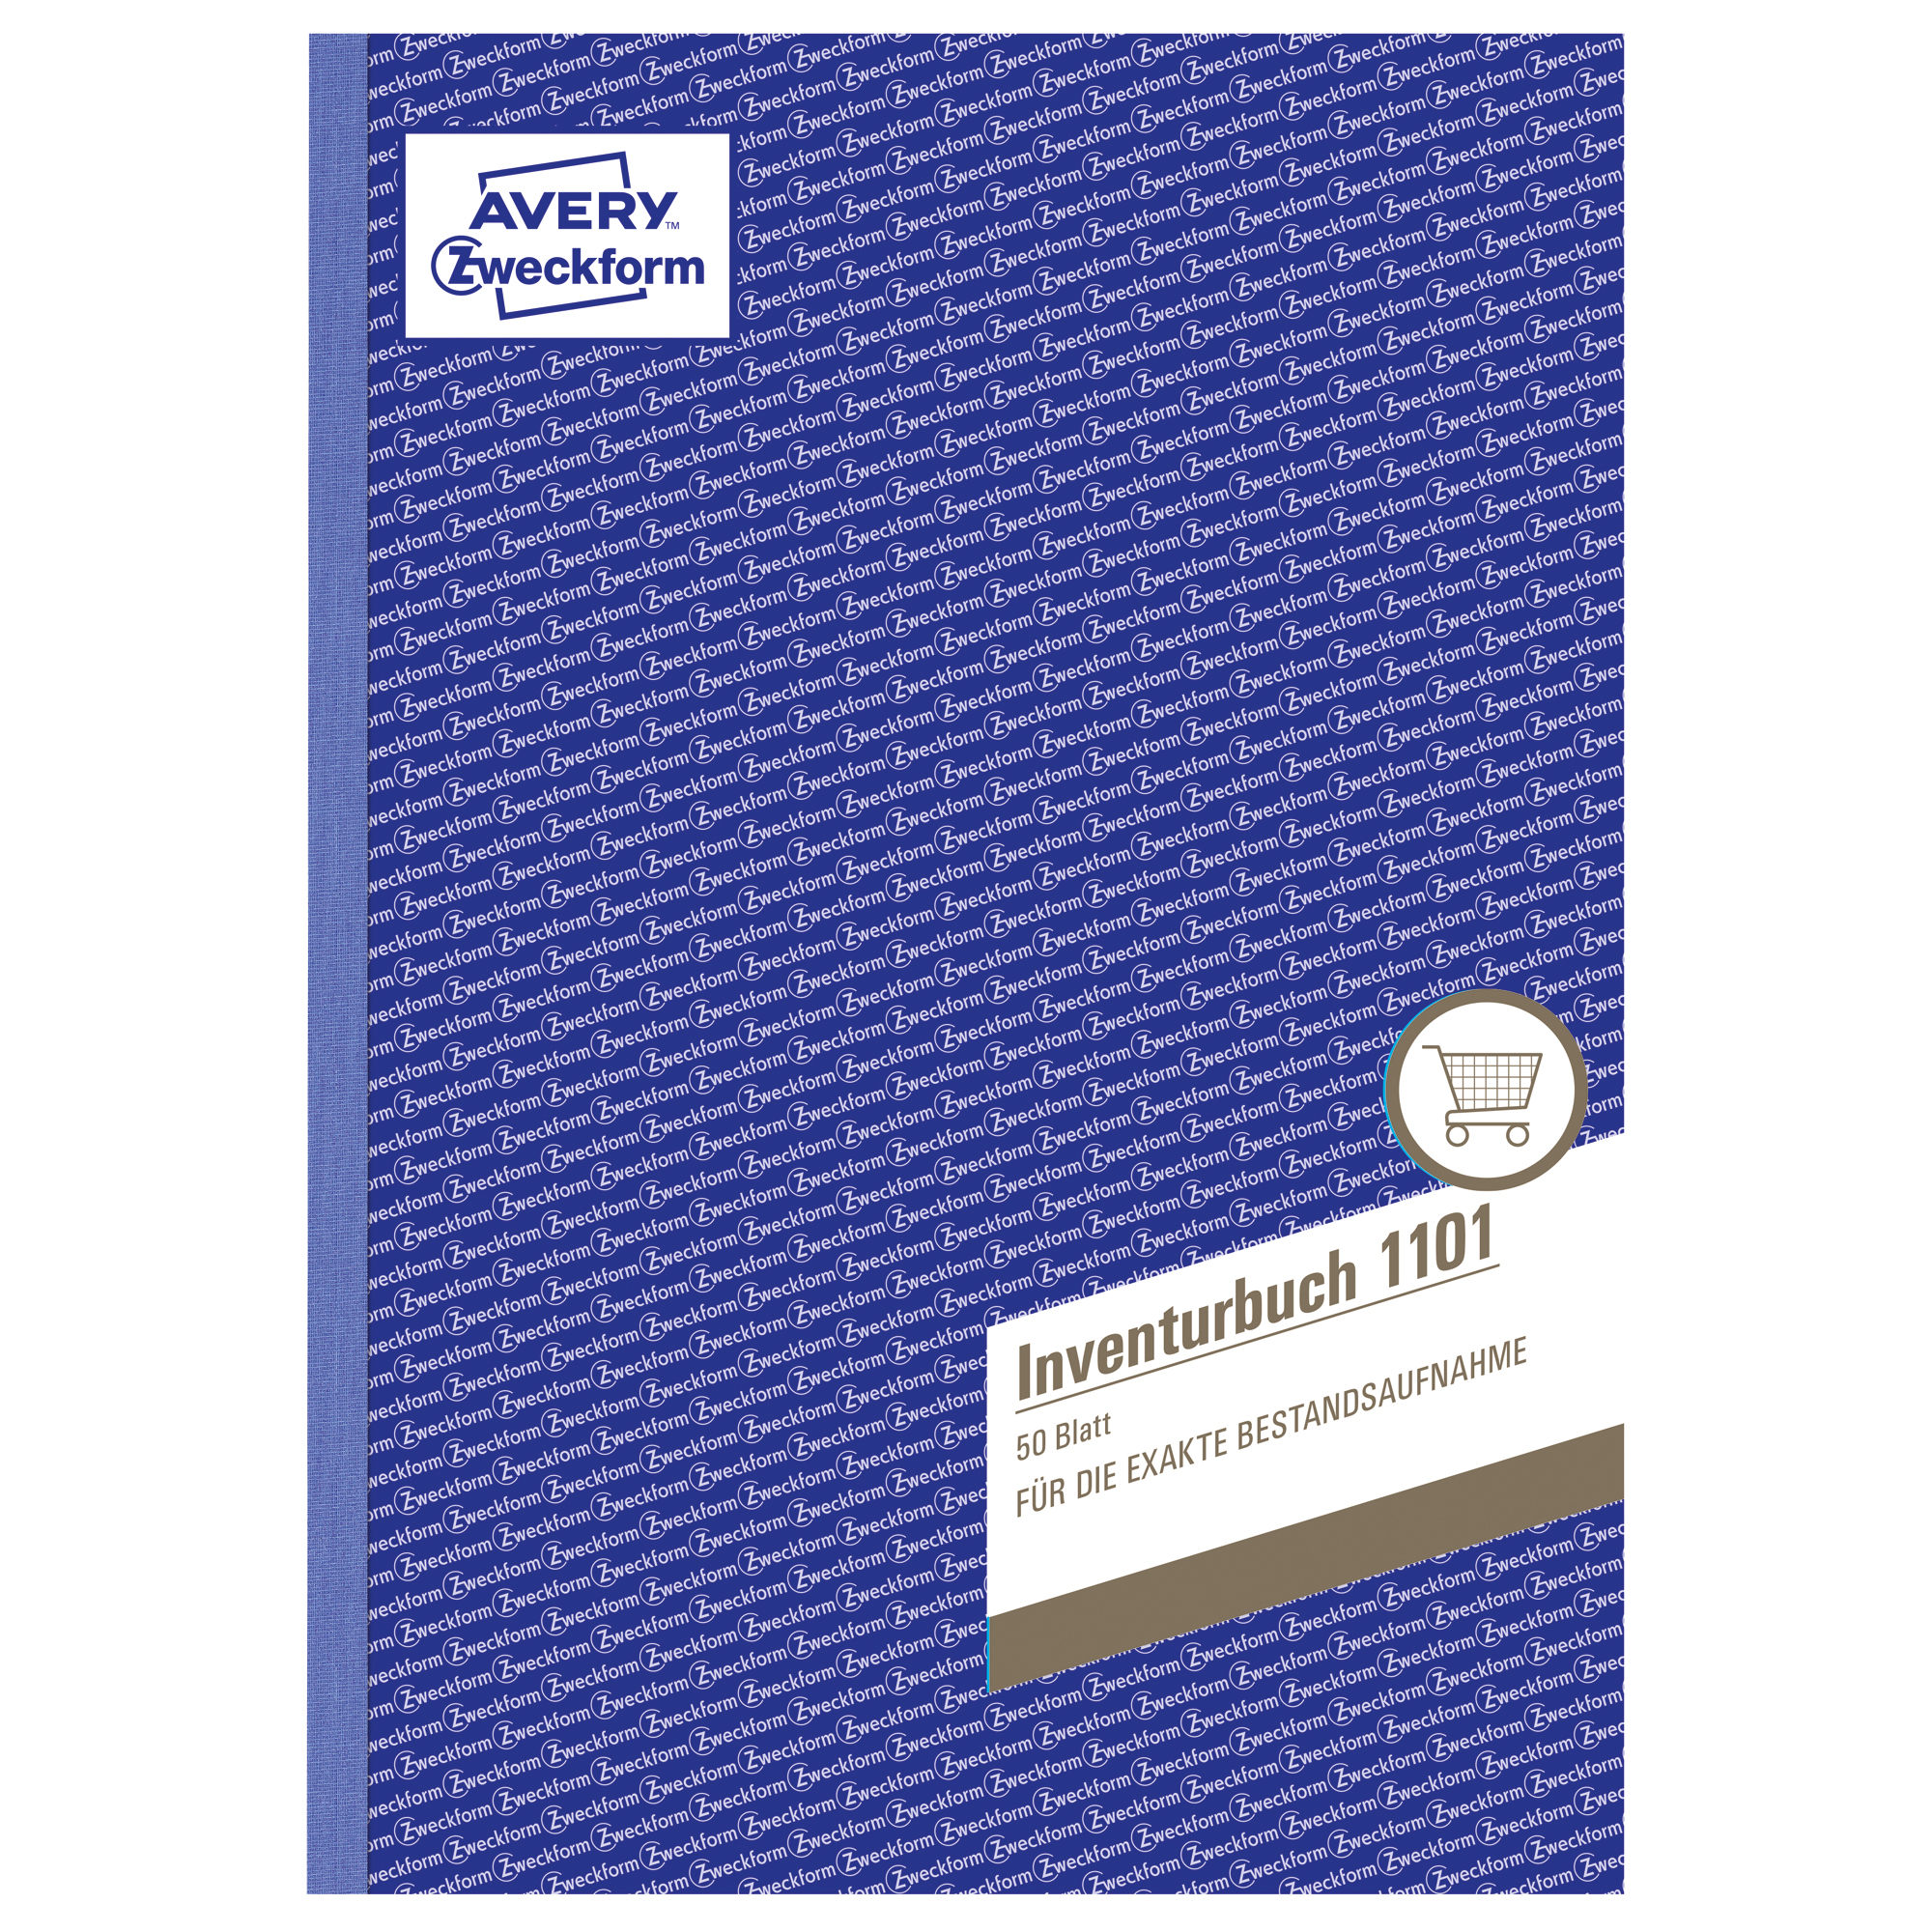 Avery Zweckform Inventurbuch DIN A4, 1101